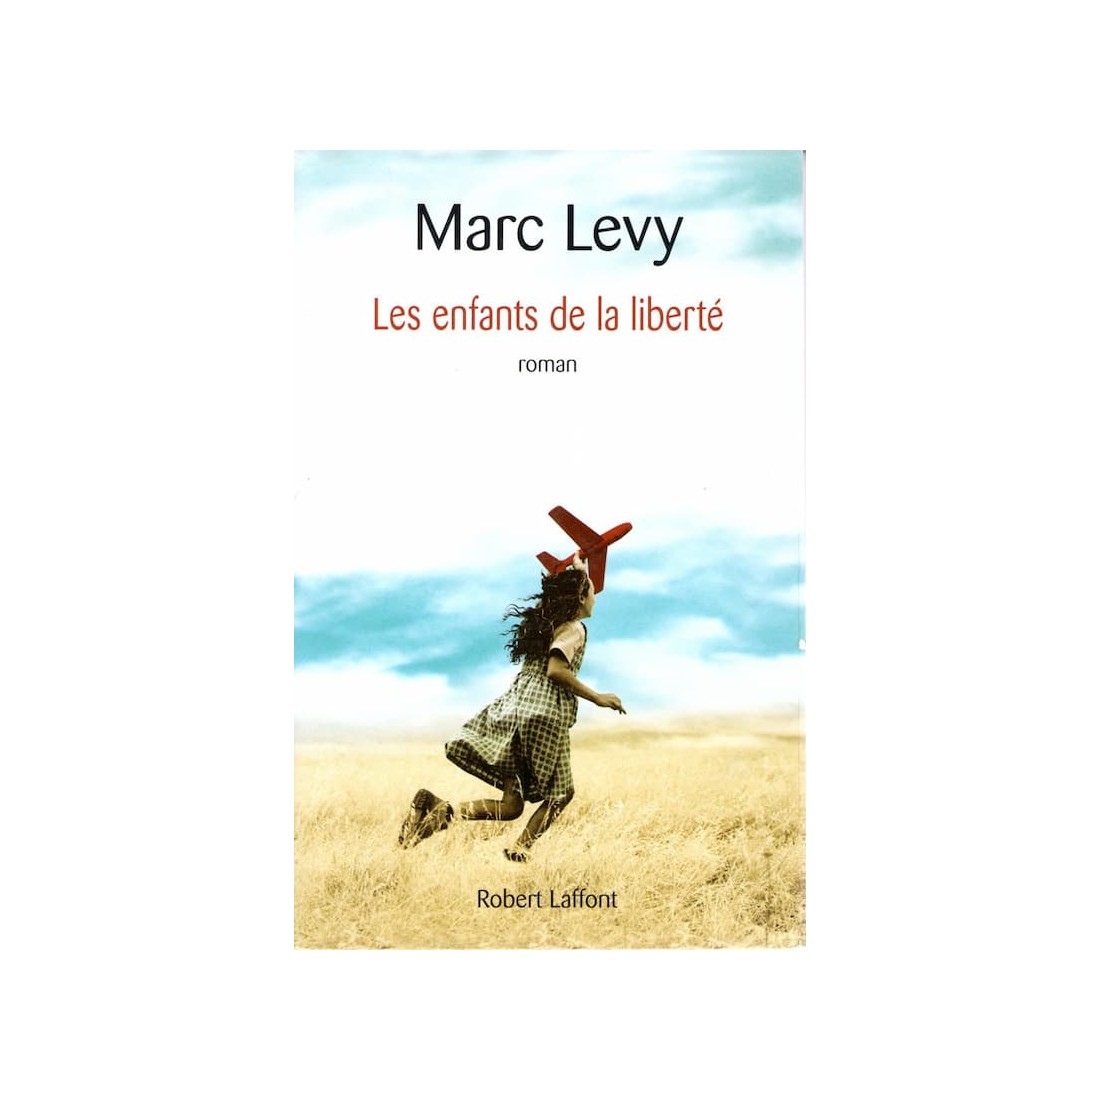 Les enfants de la liberté - Roman de Marc Levy - Ocazlivres.com